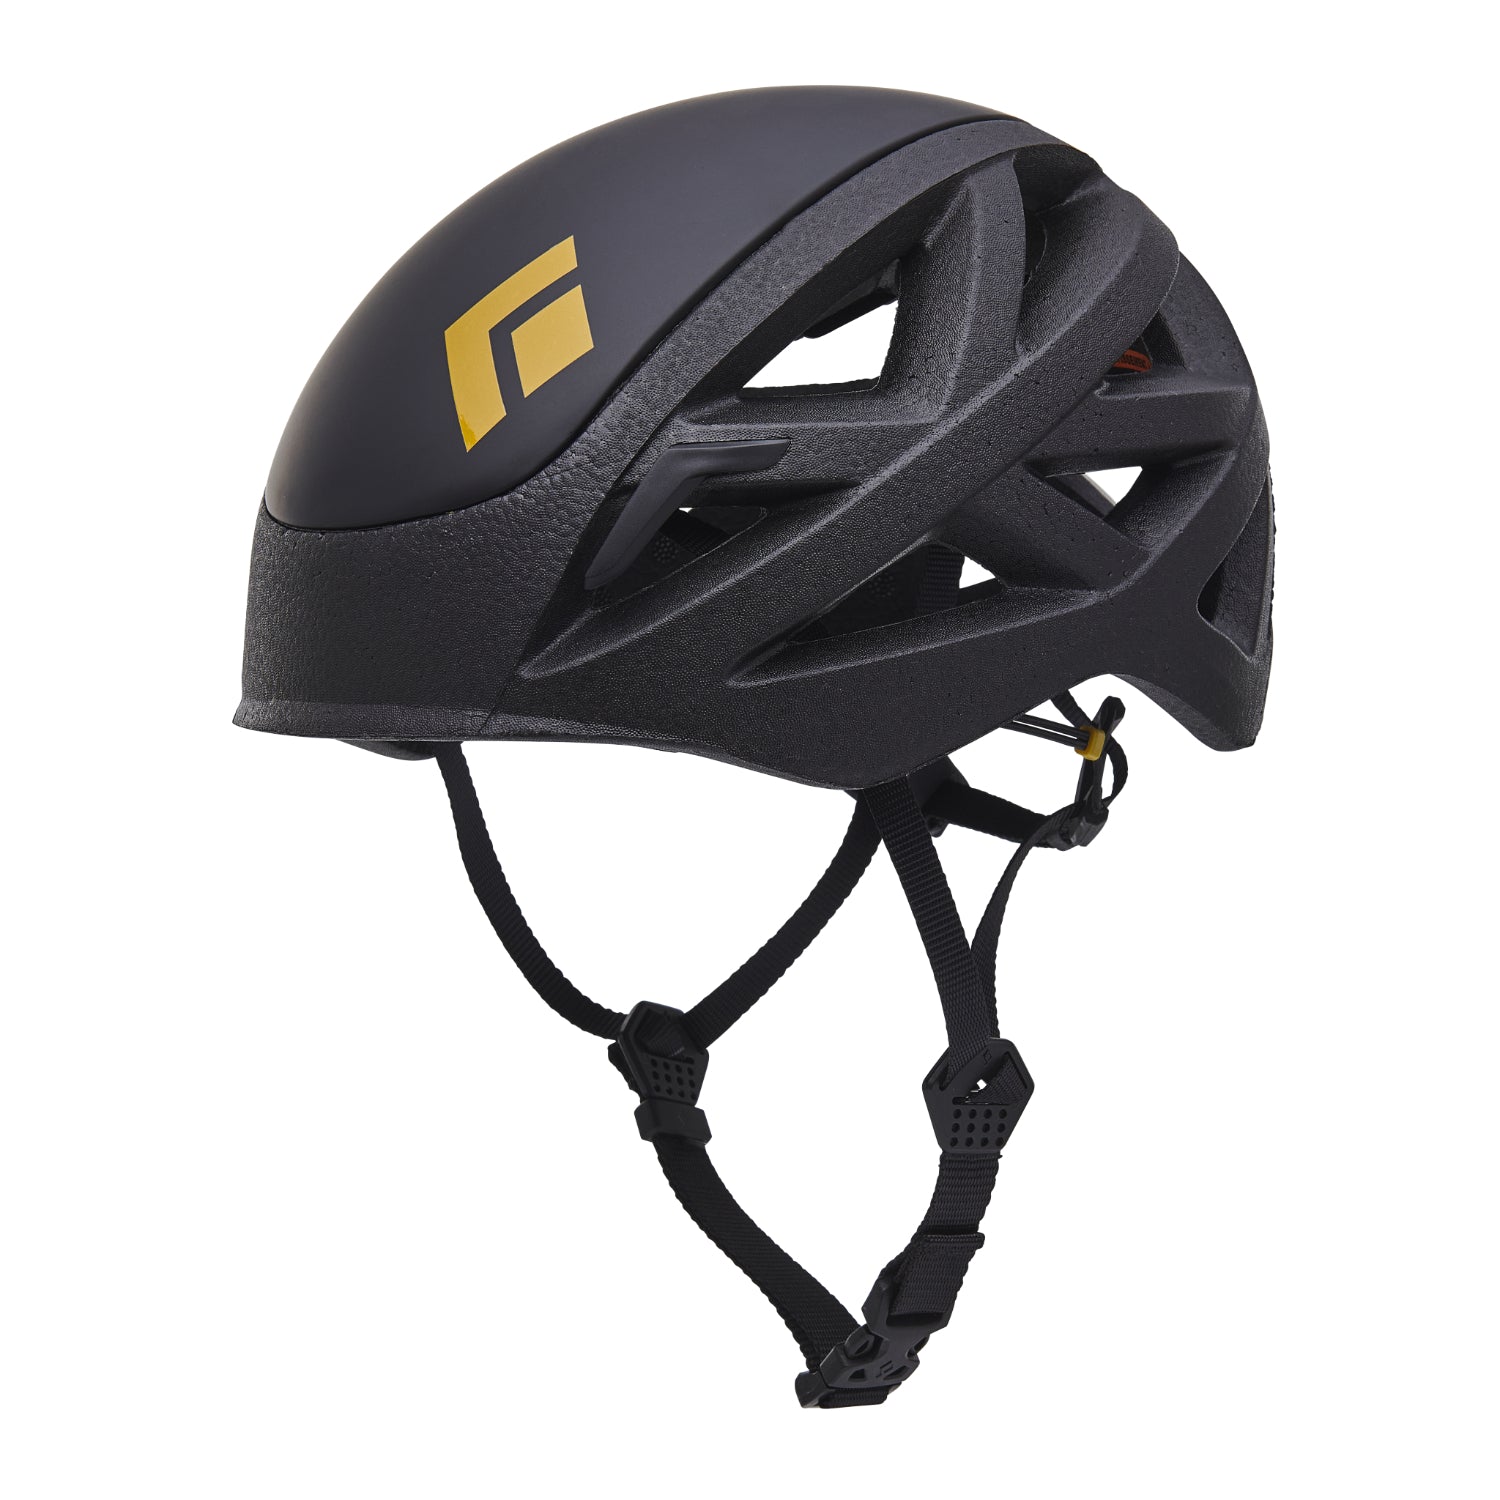 Black Diamond Vapor helmet in black with a gold logo